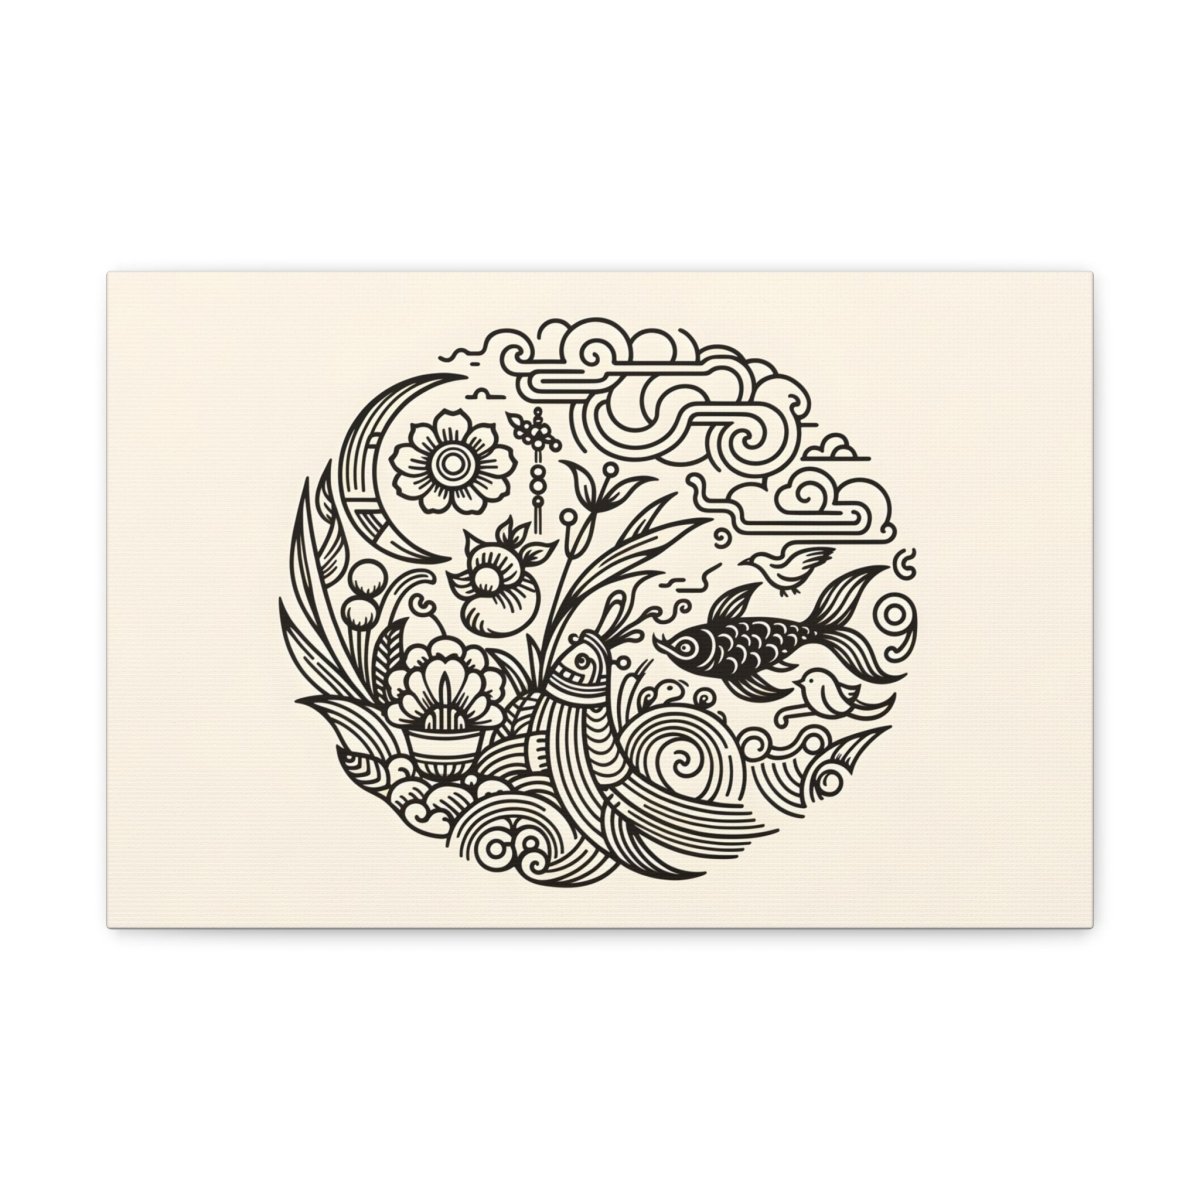 Enchanted Garden: Whimsical Nature Circular Art Print - Chinese Folk Art - Neodigitalis Artimata